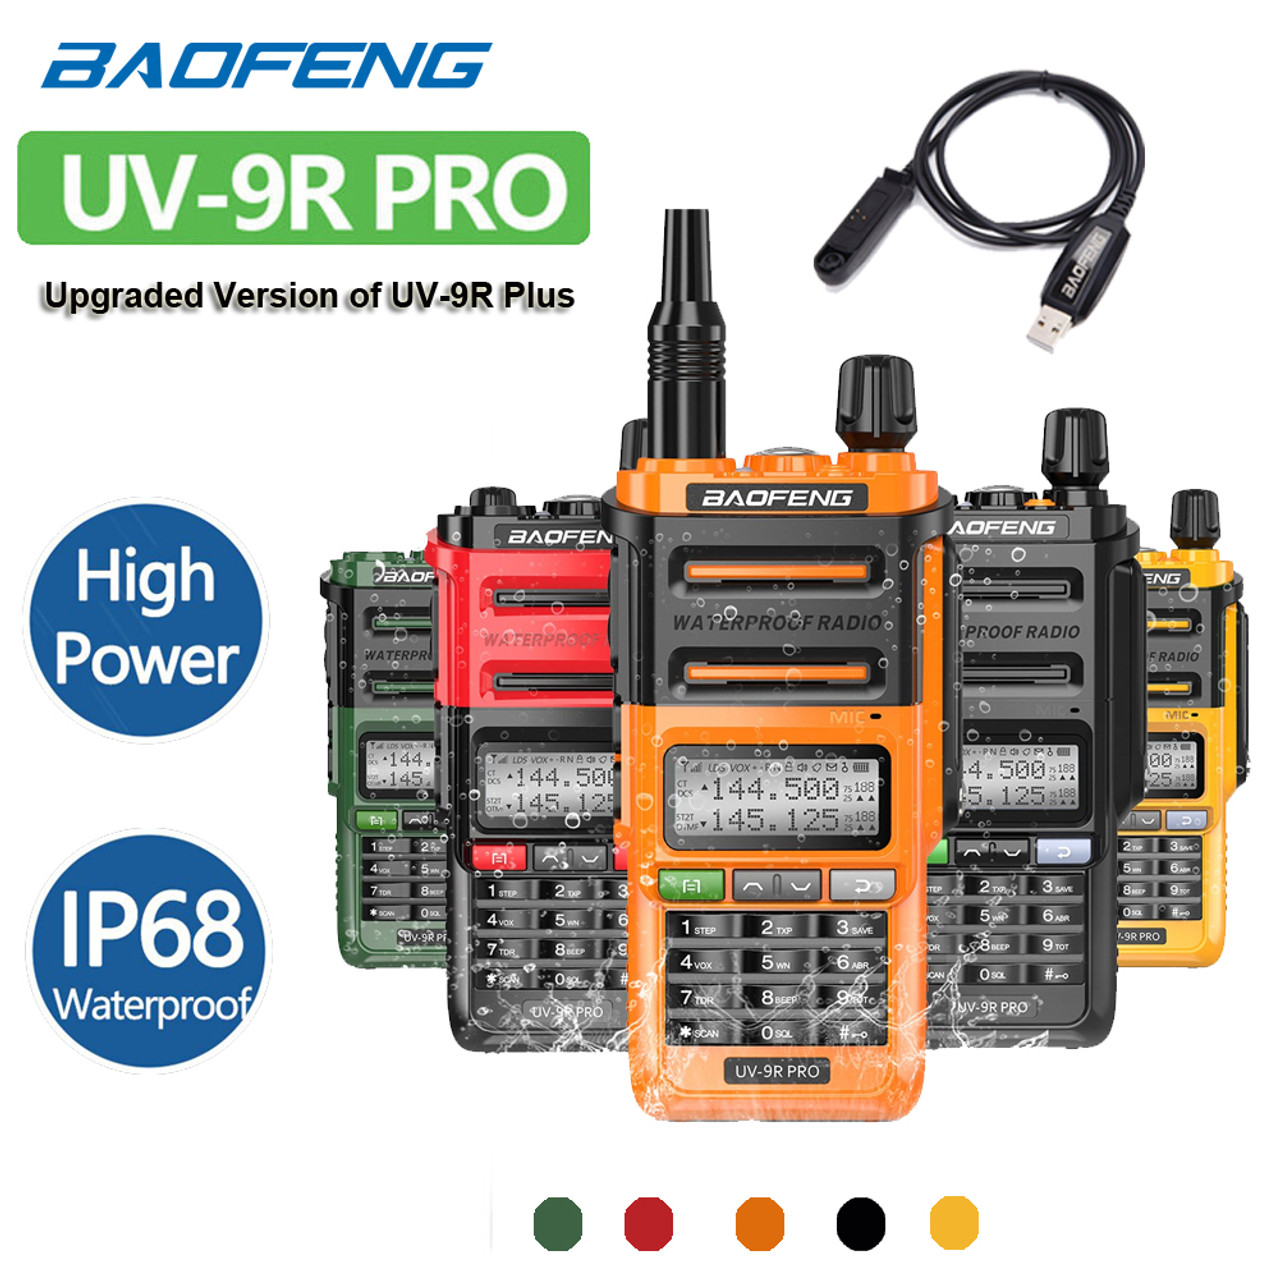 4 x Baofeng UV 9R PRO IP68 Waterproof Walkie Talkie UHF/VHF 8W Dual Band  High Power Long Range Radio + Earpiece